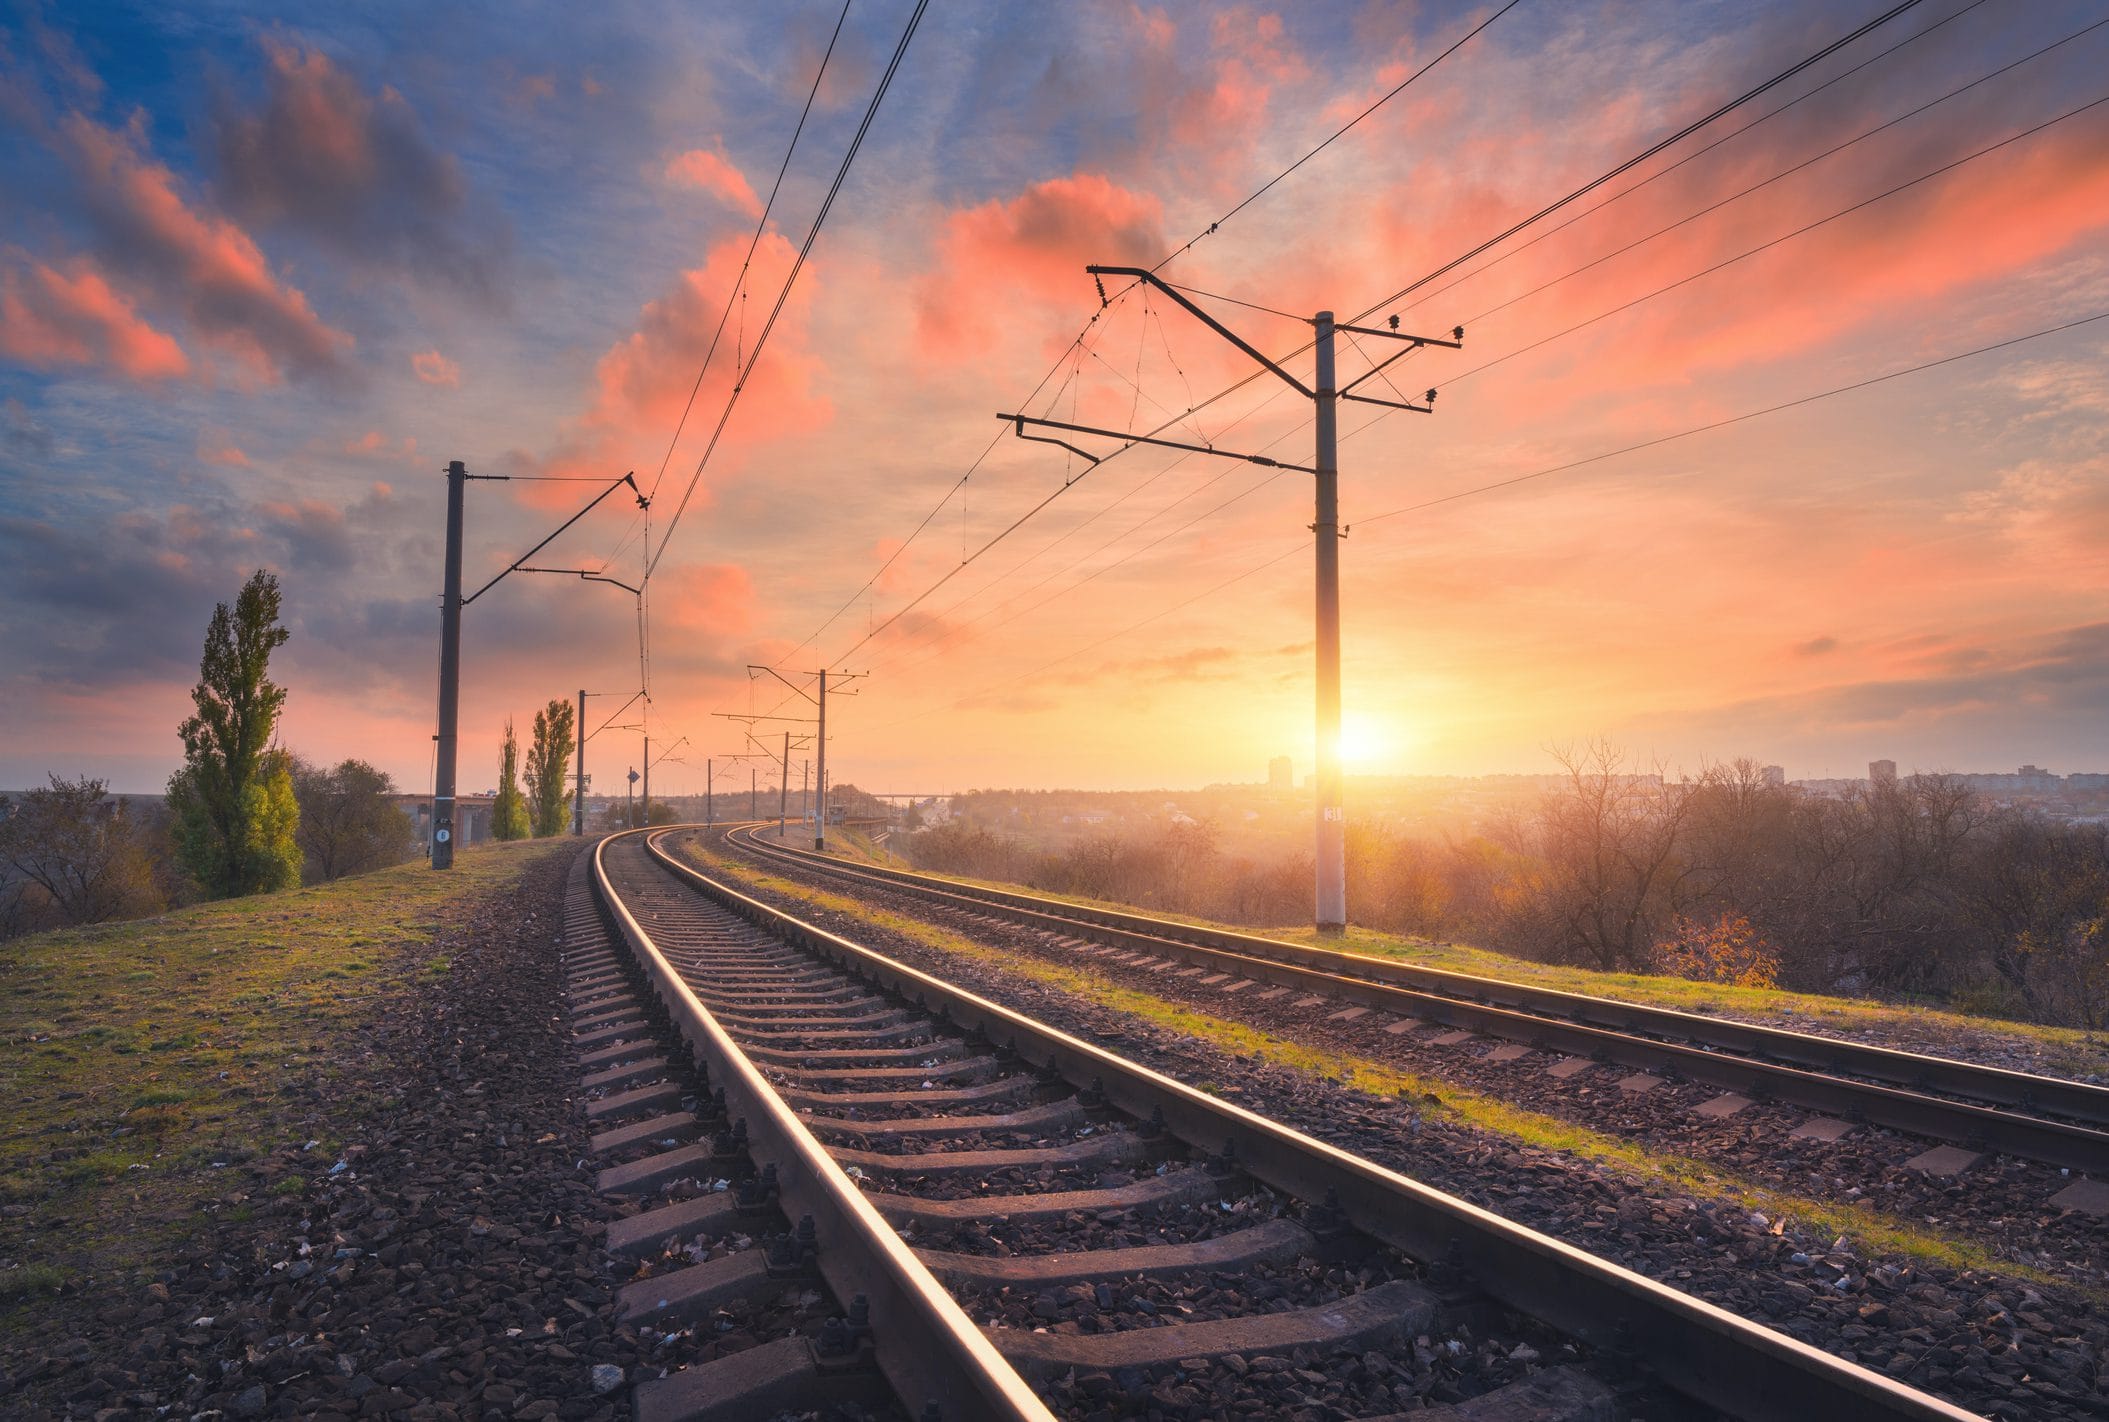 Railway lines sunset image